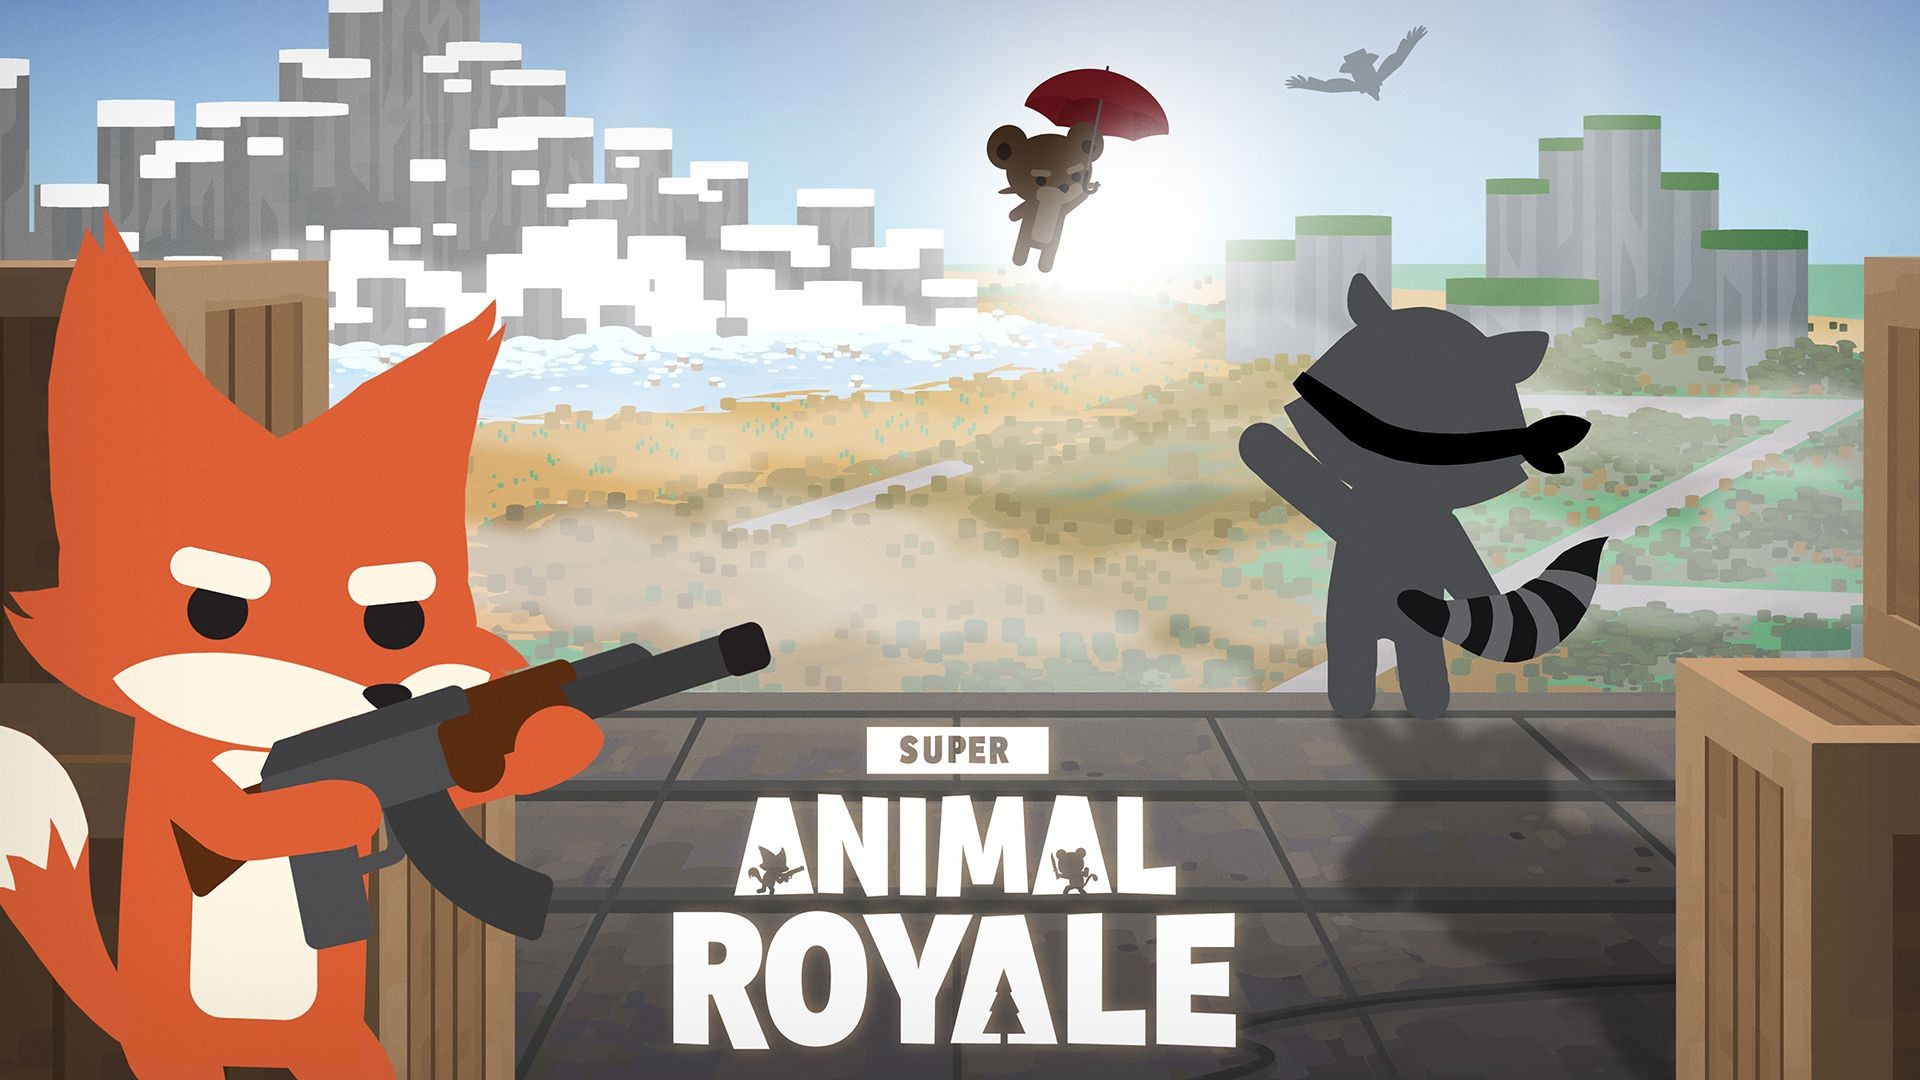 Super Animal Royale เกมน่ารัก แนว Battle Royale ที่ไม่น่ารักอย่างที่เห็น